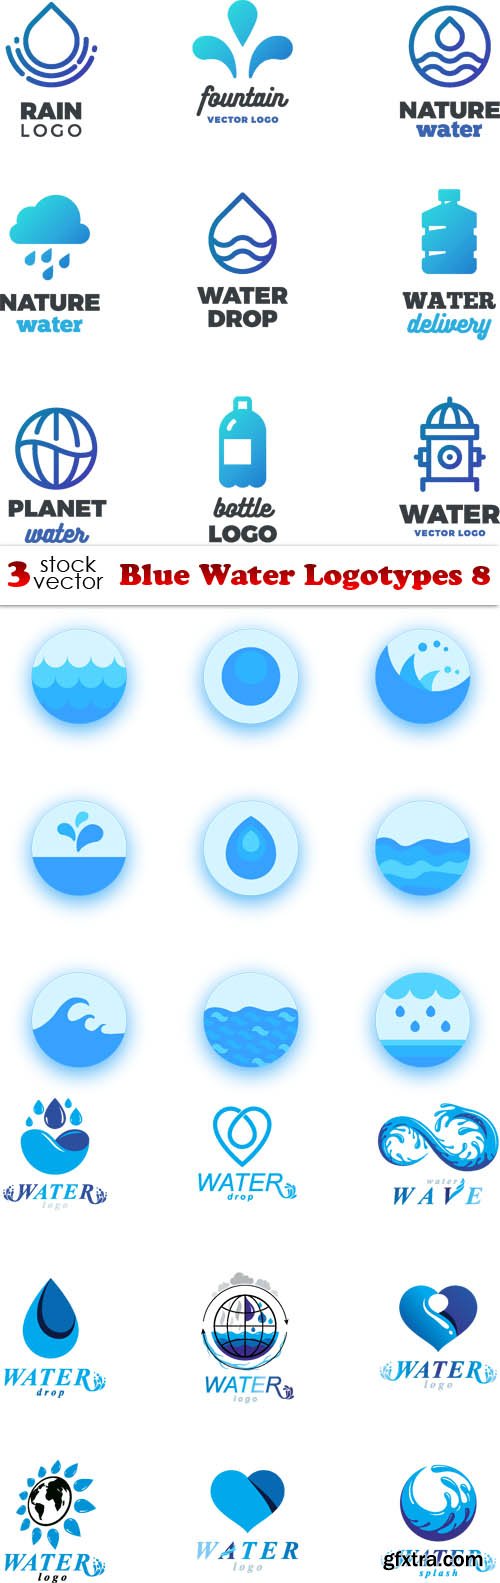 Vectors - Blue Water Logotypes 8